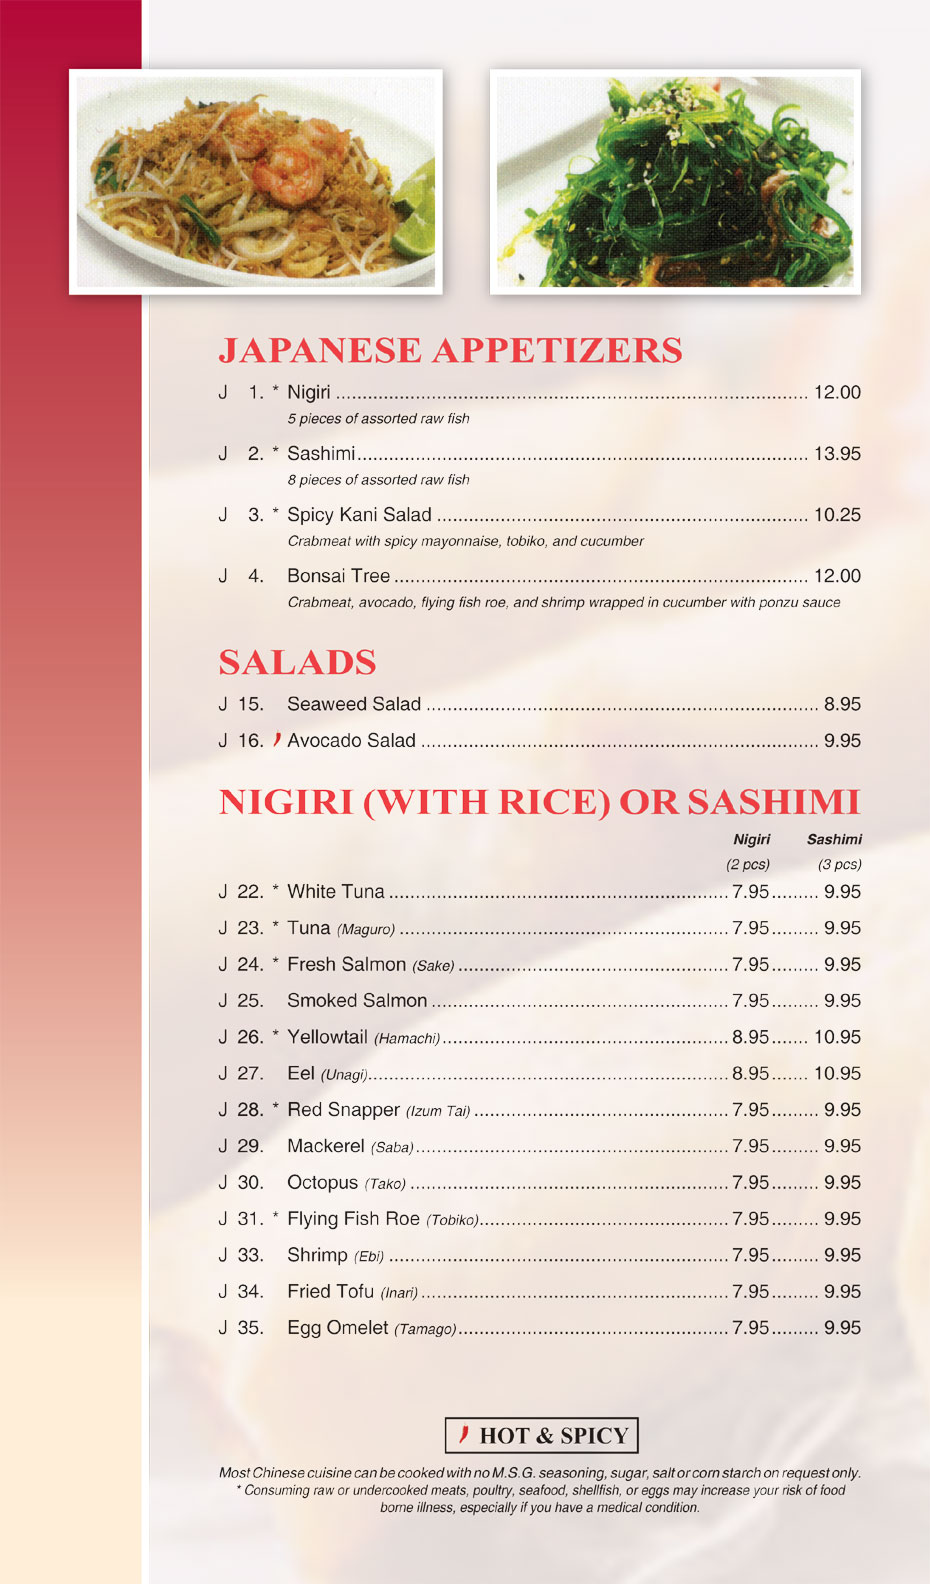 Japanese Appetizers, Salads, Nigiri (with rice) of Sashimi